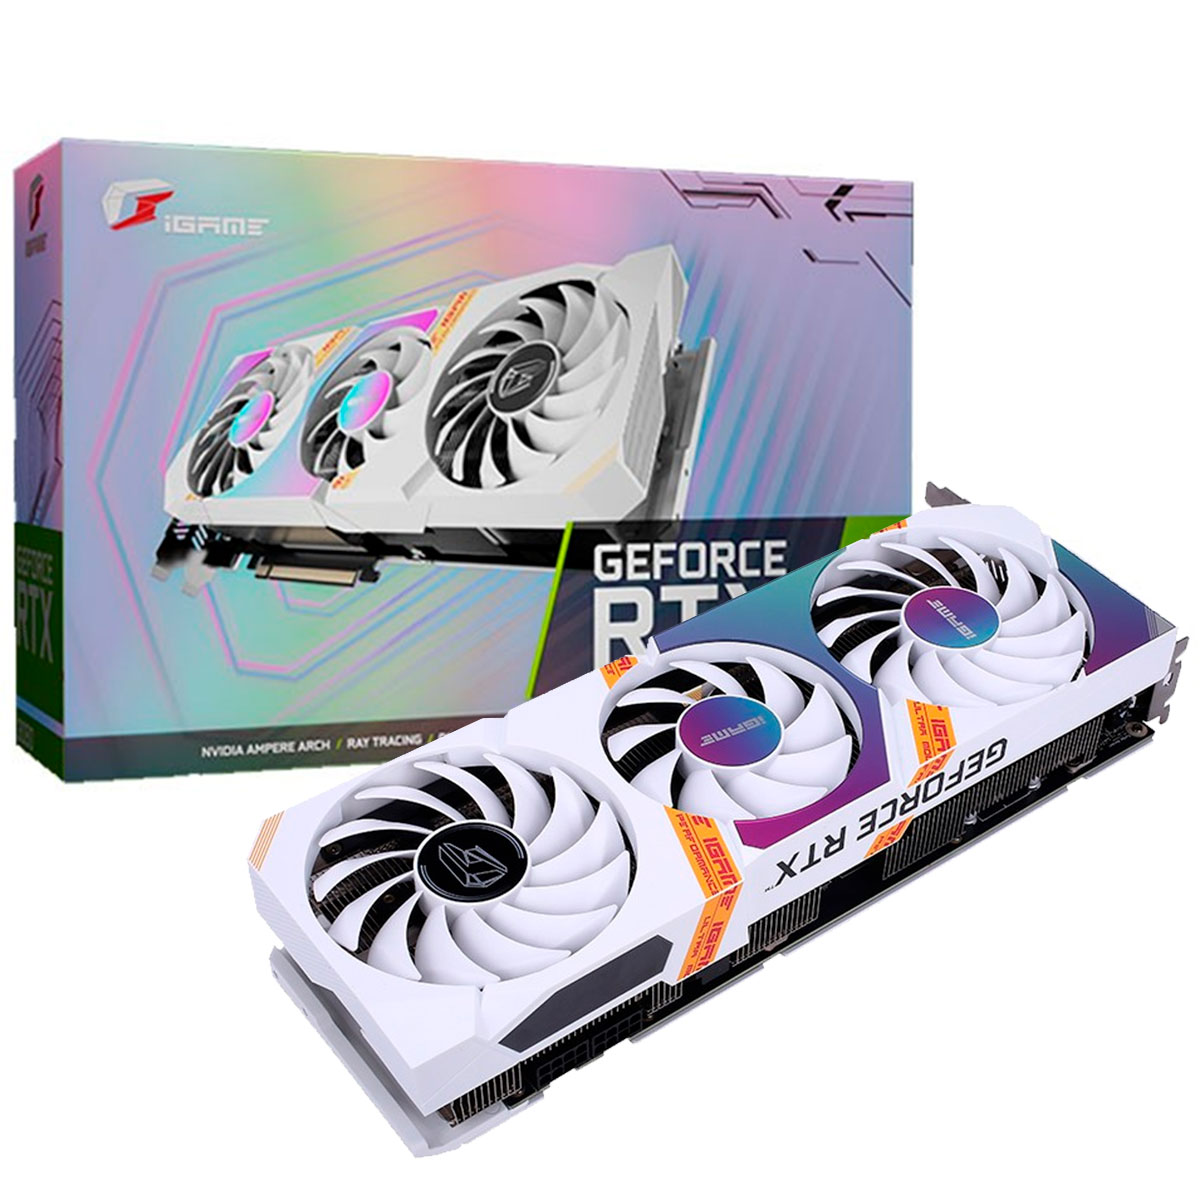 GeForce RTX 3070 8GB GDDR6 256bits - Colorful iGame G-I3070 Ultra W OC-V - Selo LHR